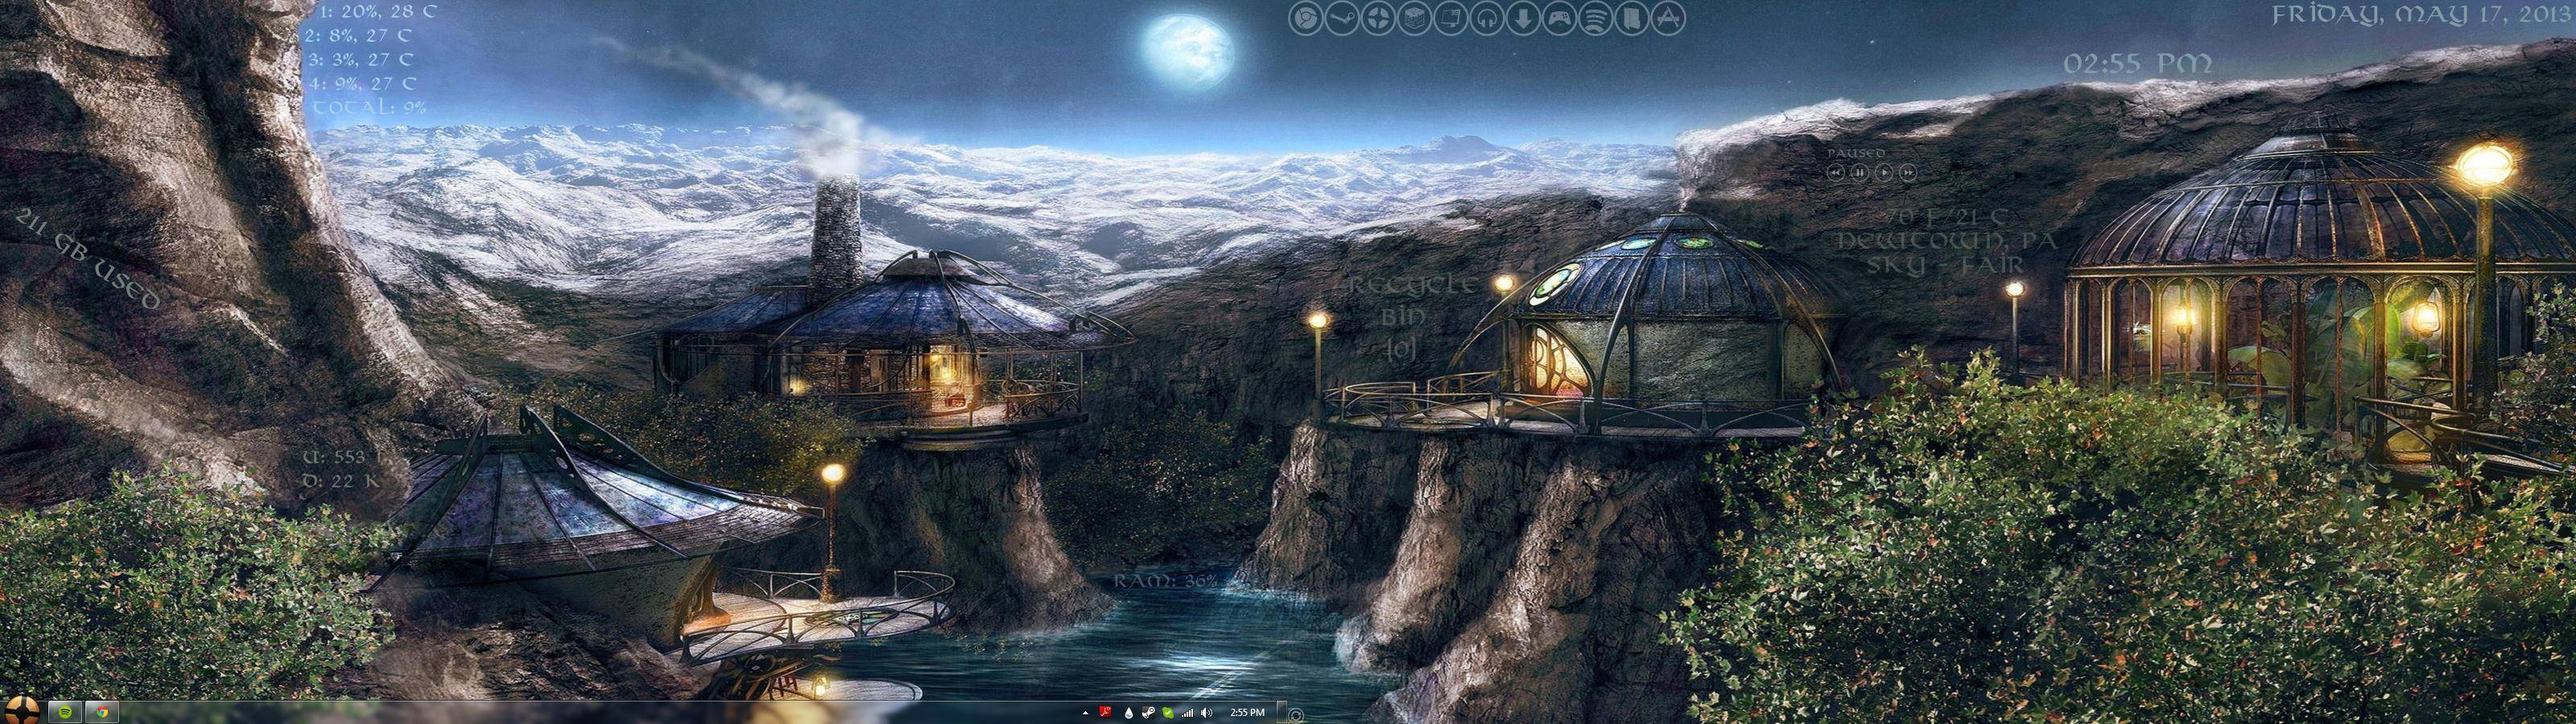 fondo de pantalla de 3200 x 900,naturaleza,paisaje natural,cielo,juego de acción y aventura,juego de pc